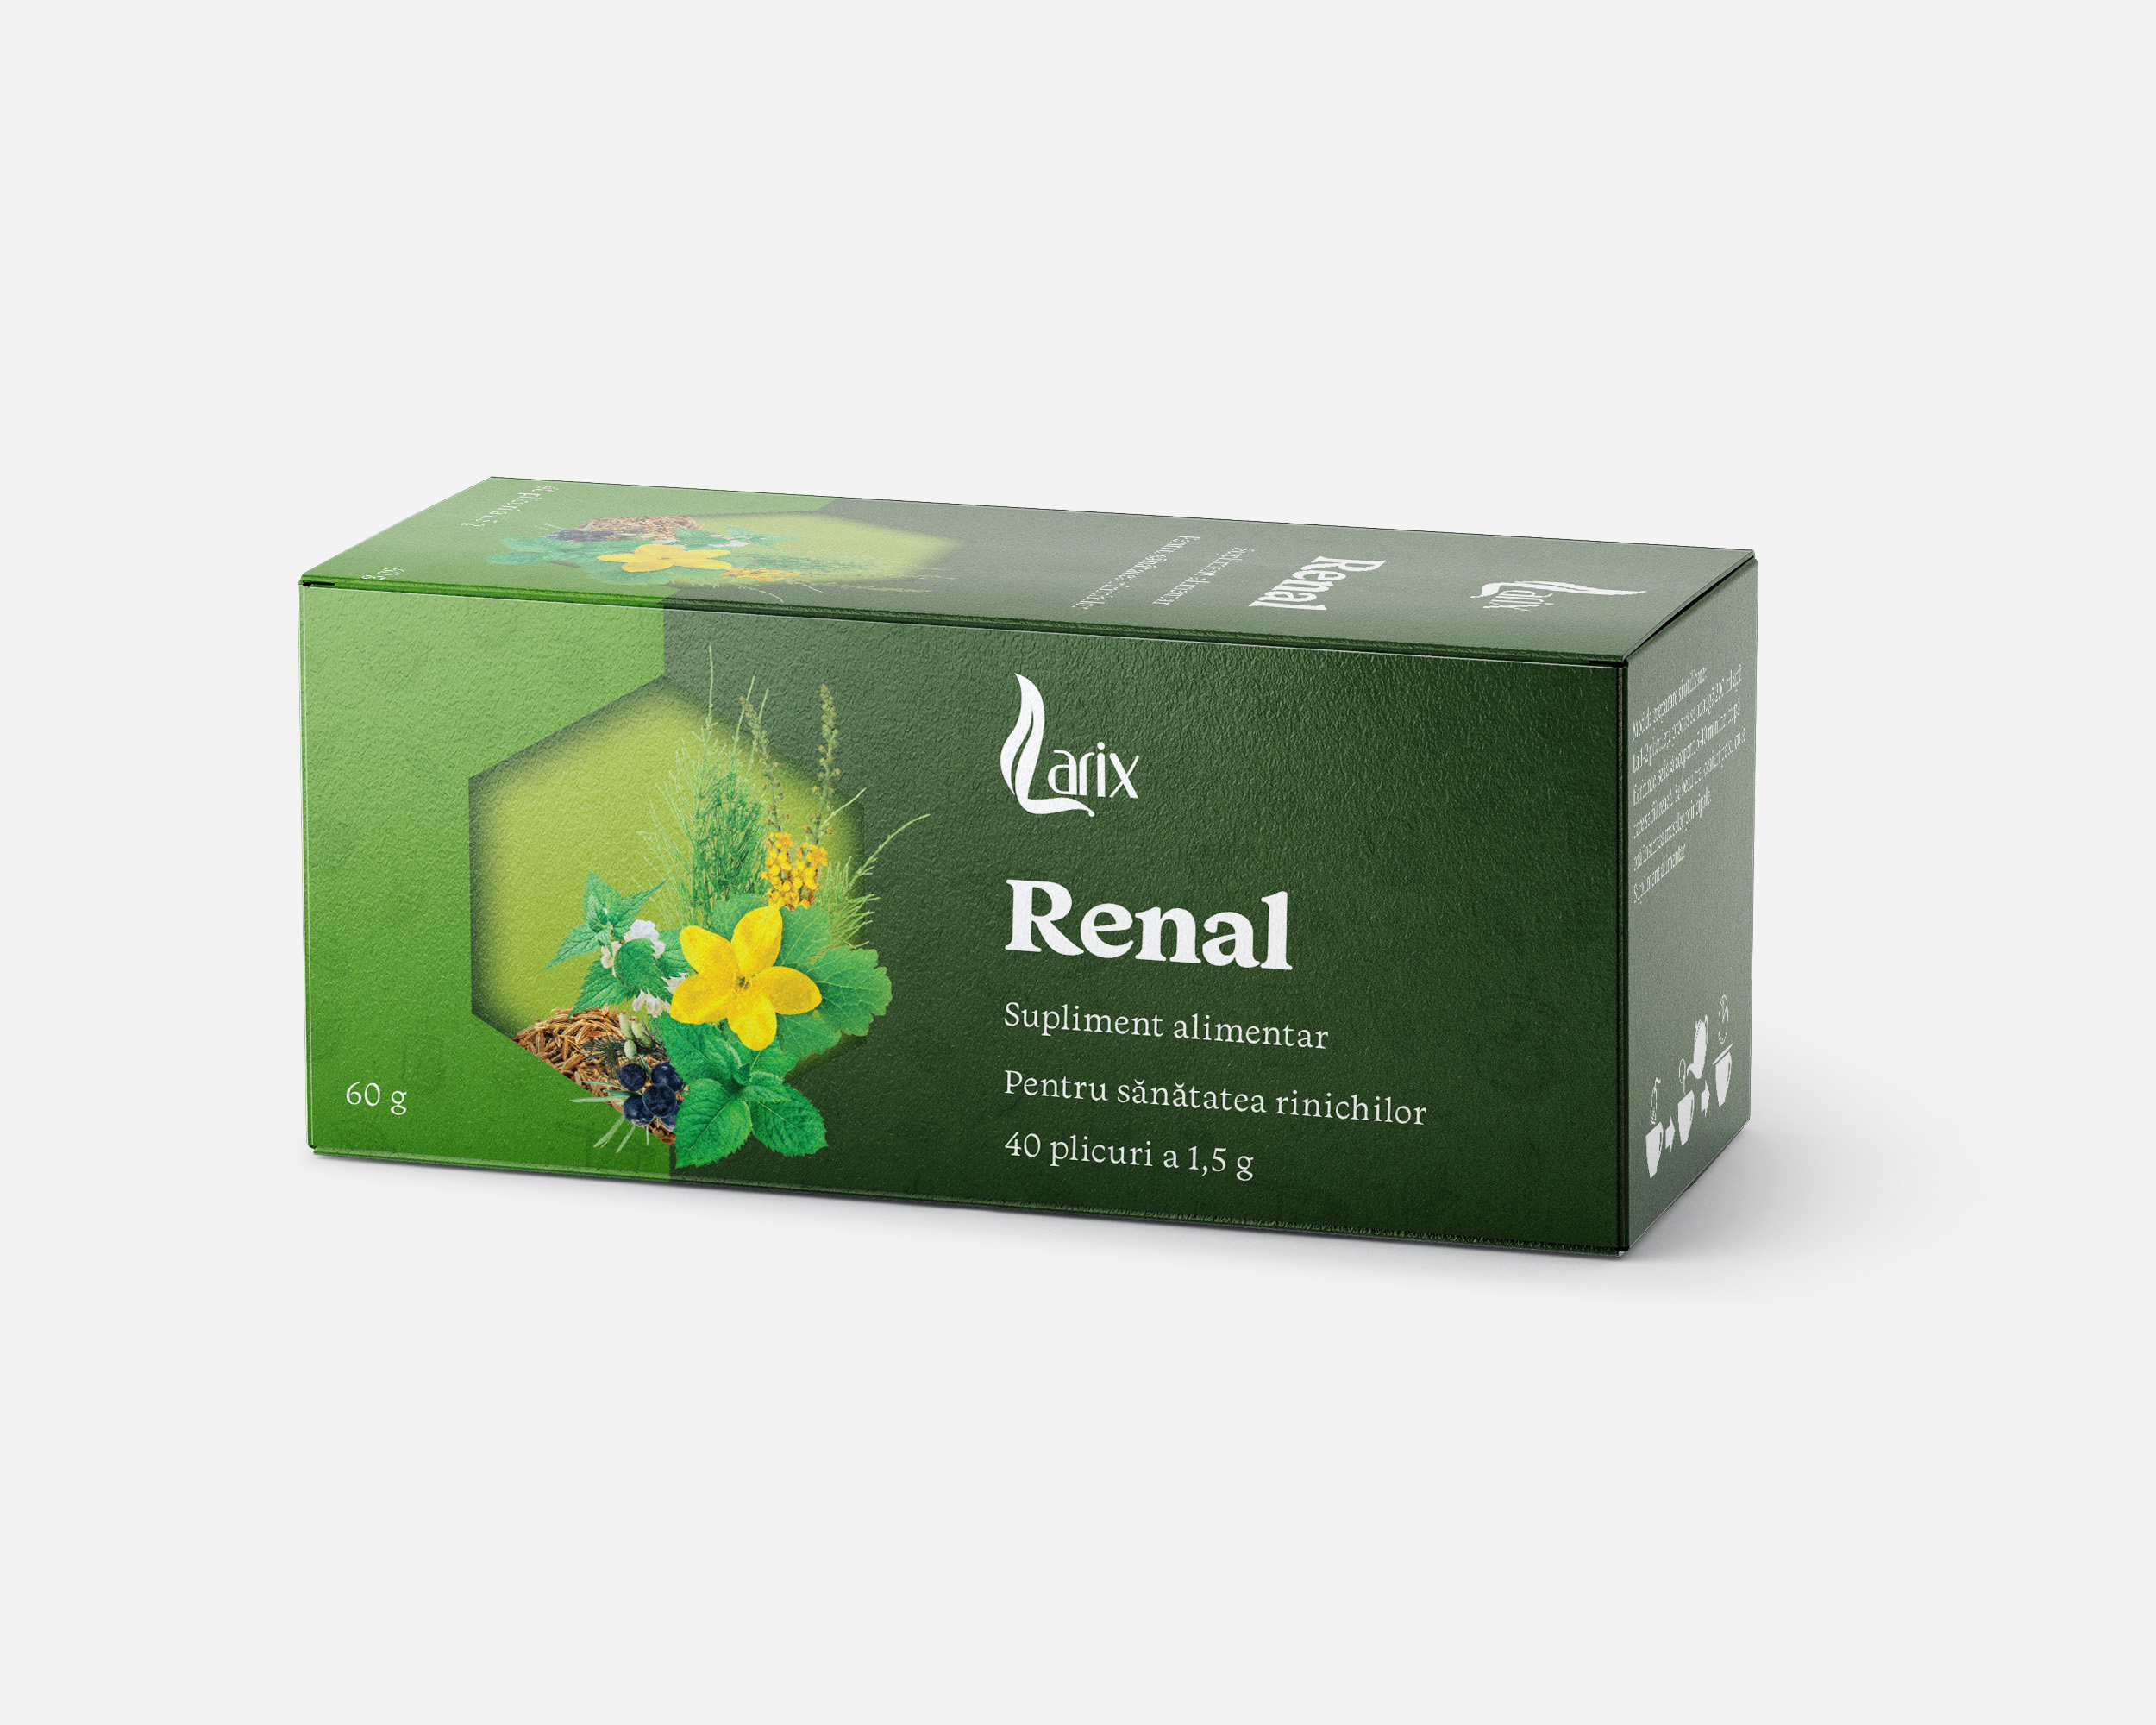 Ceaiuri - CEAI RENAL * 40 PLIC LARIX, farmacom.ro